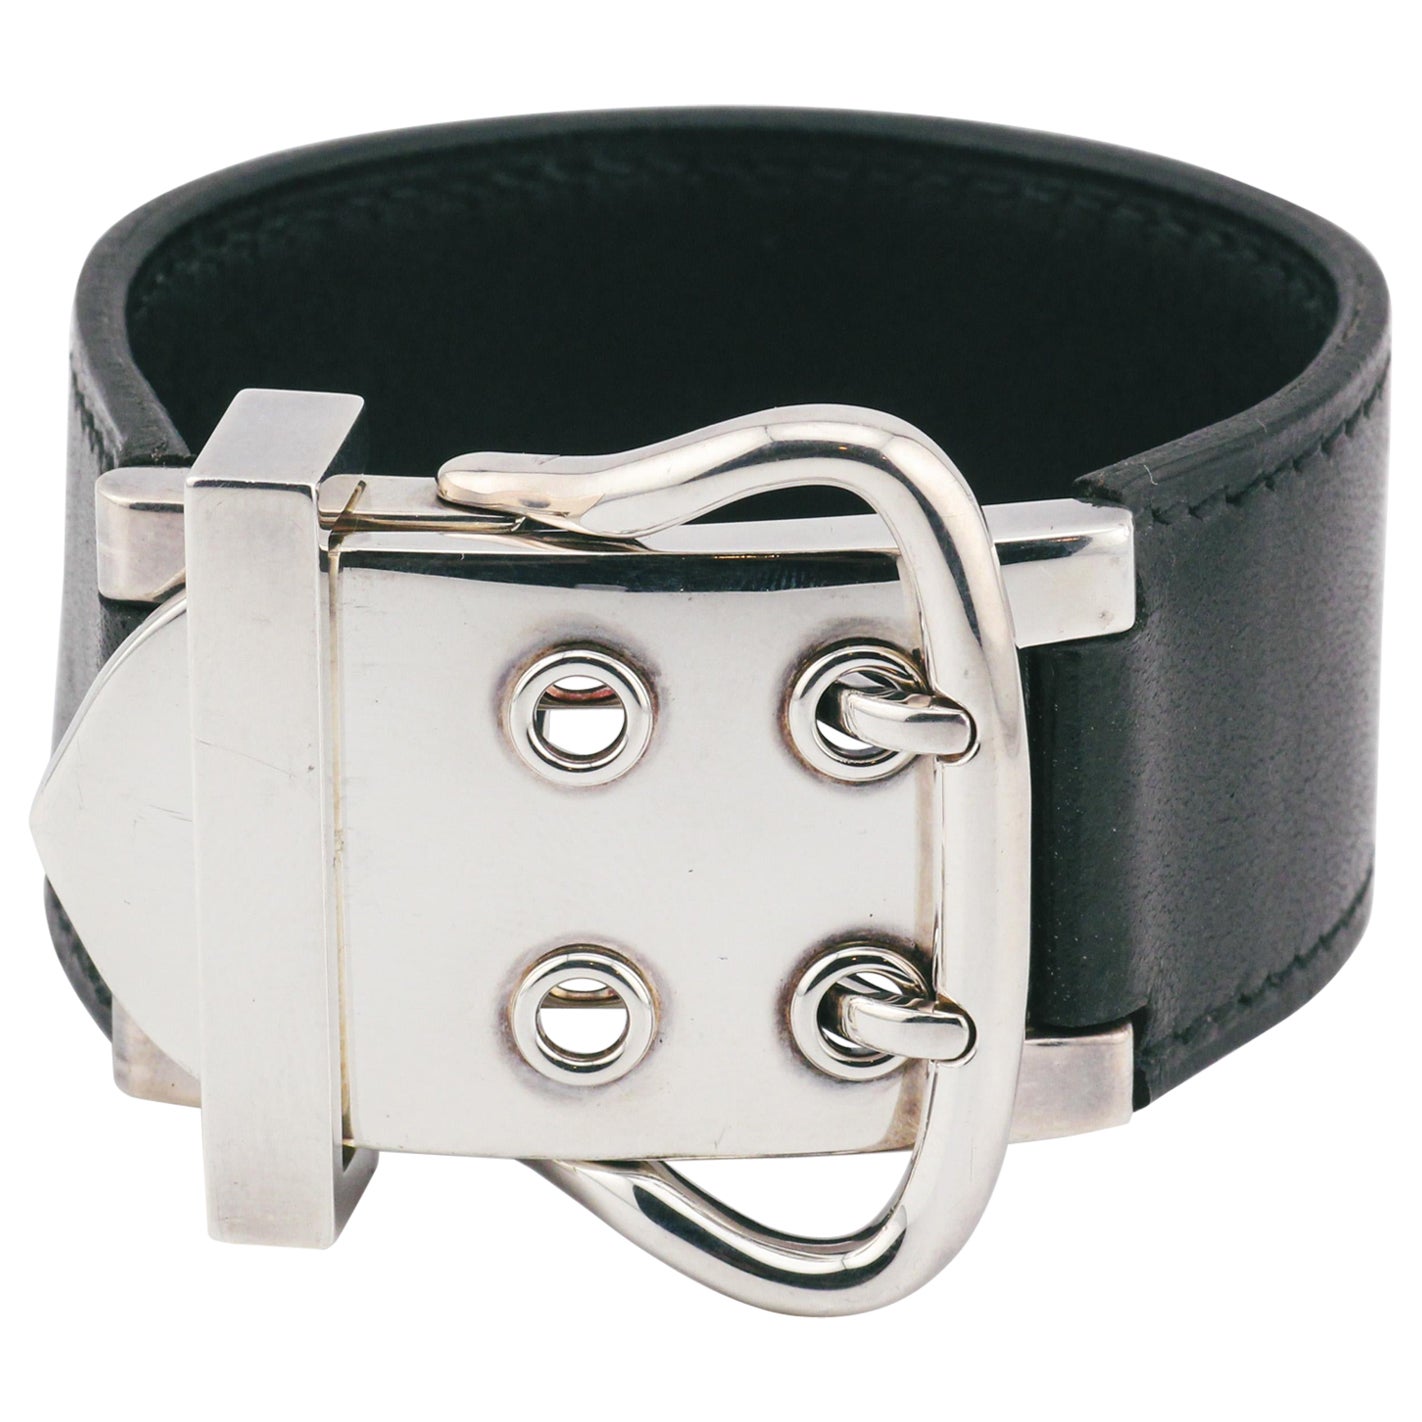 Hermes Black Leather and Sterling Silver Buckle Bracelet